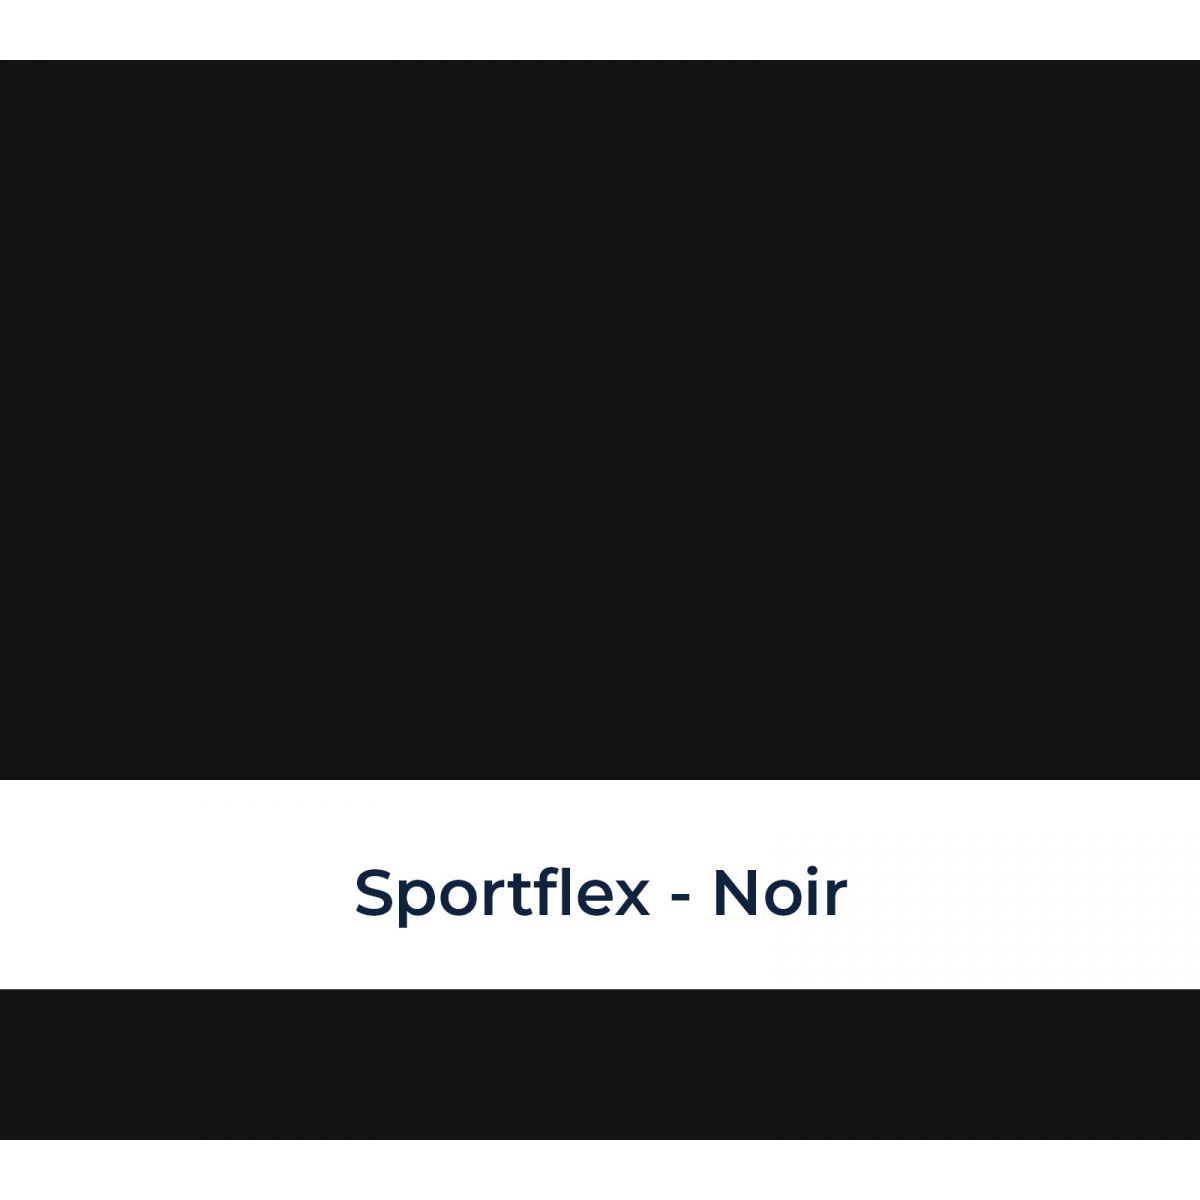 Sportflex noir